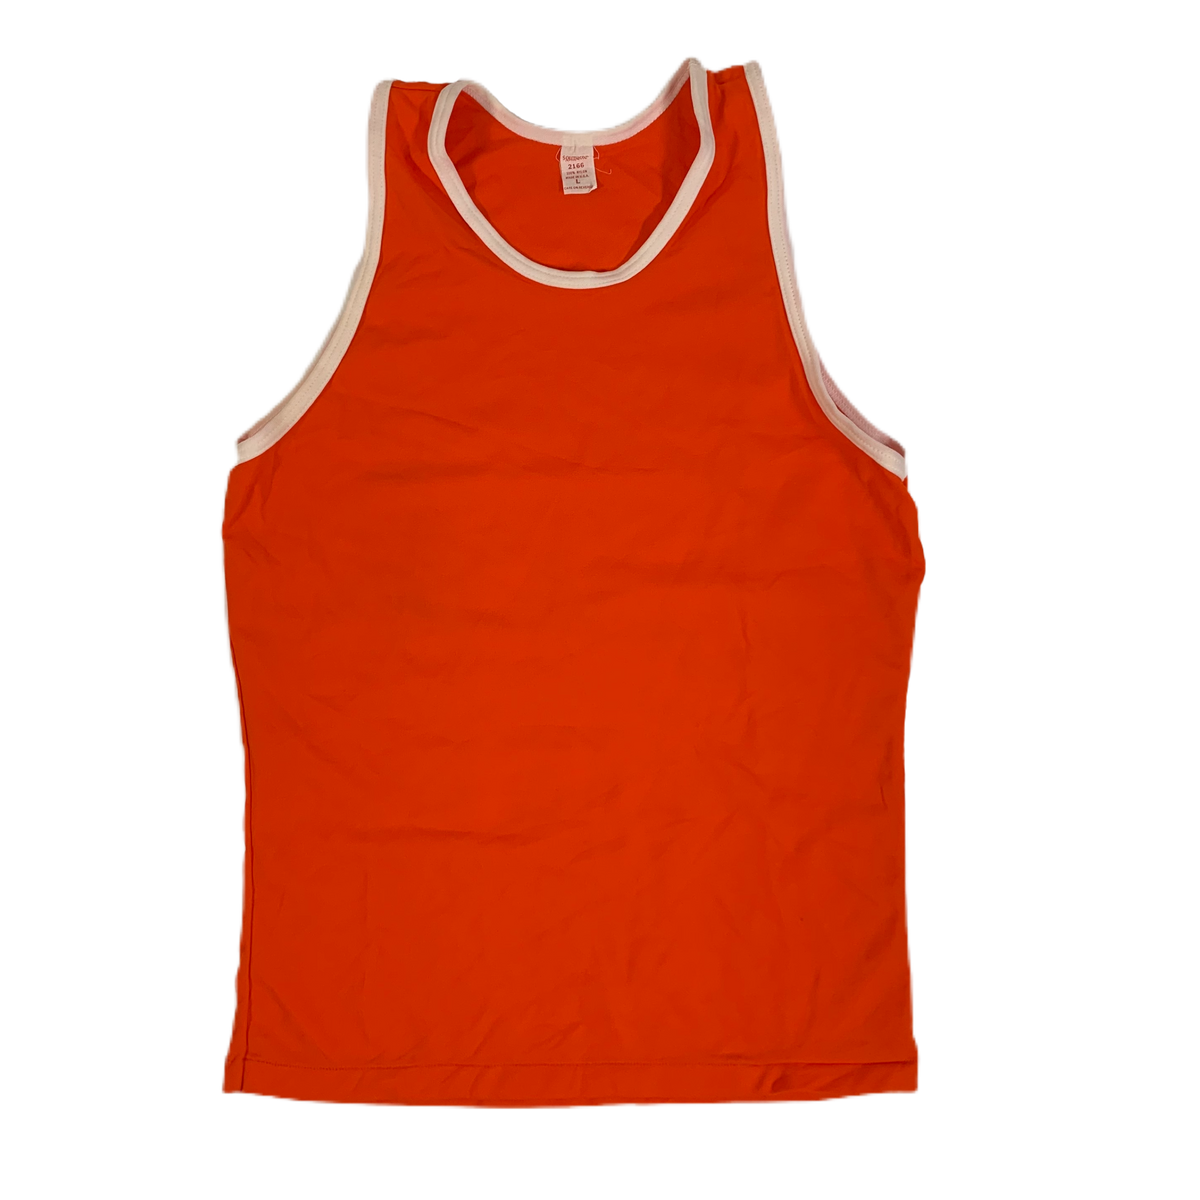 Vintage Southern Athletic “Orange” Basketball Jersey